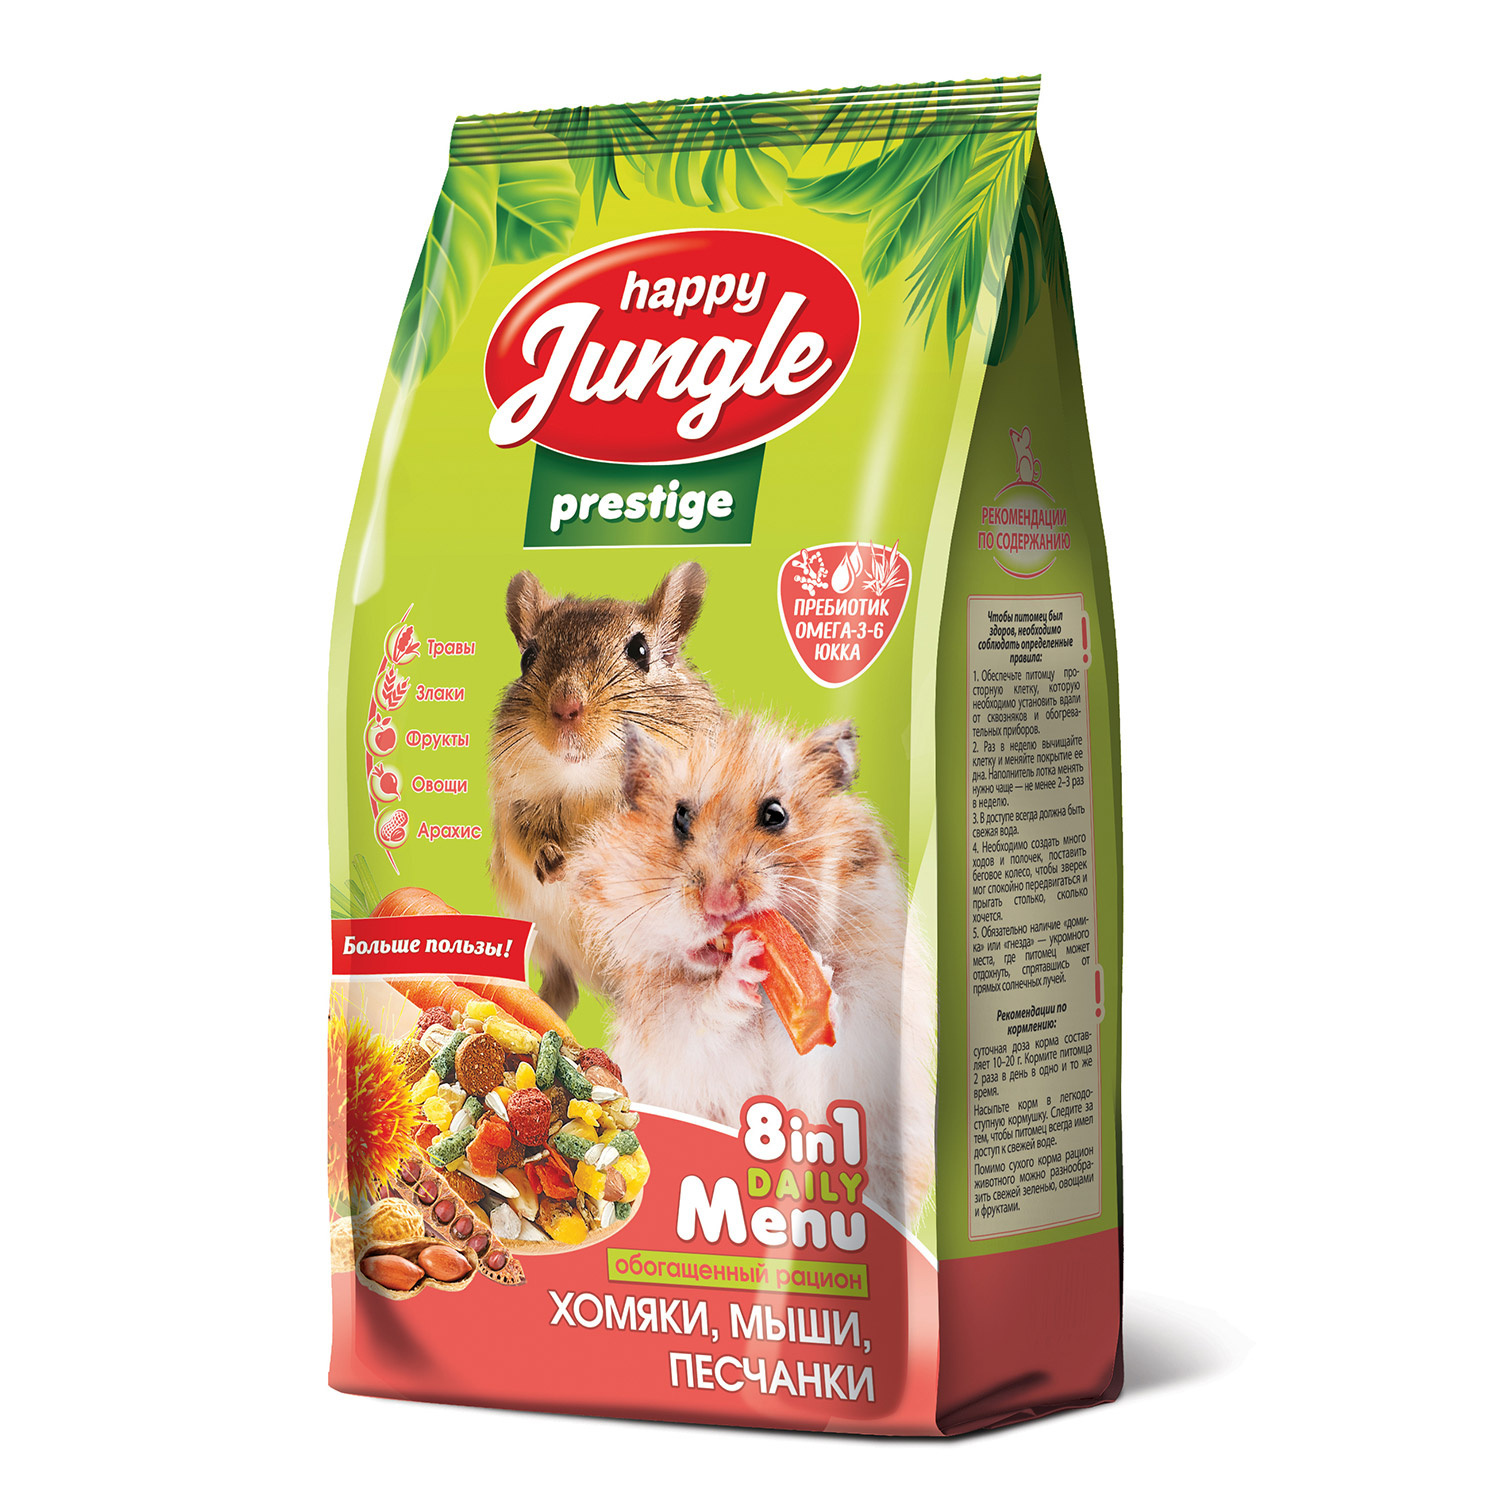 Happy Jungle престиж Корм для хомяков, мышей, песчанок 500 г (500 г)